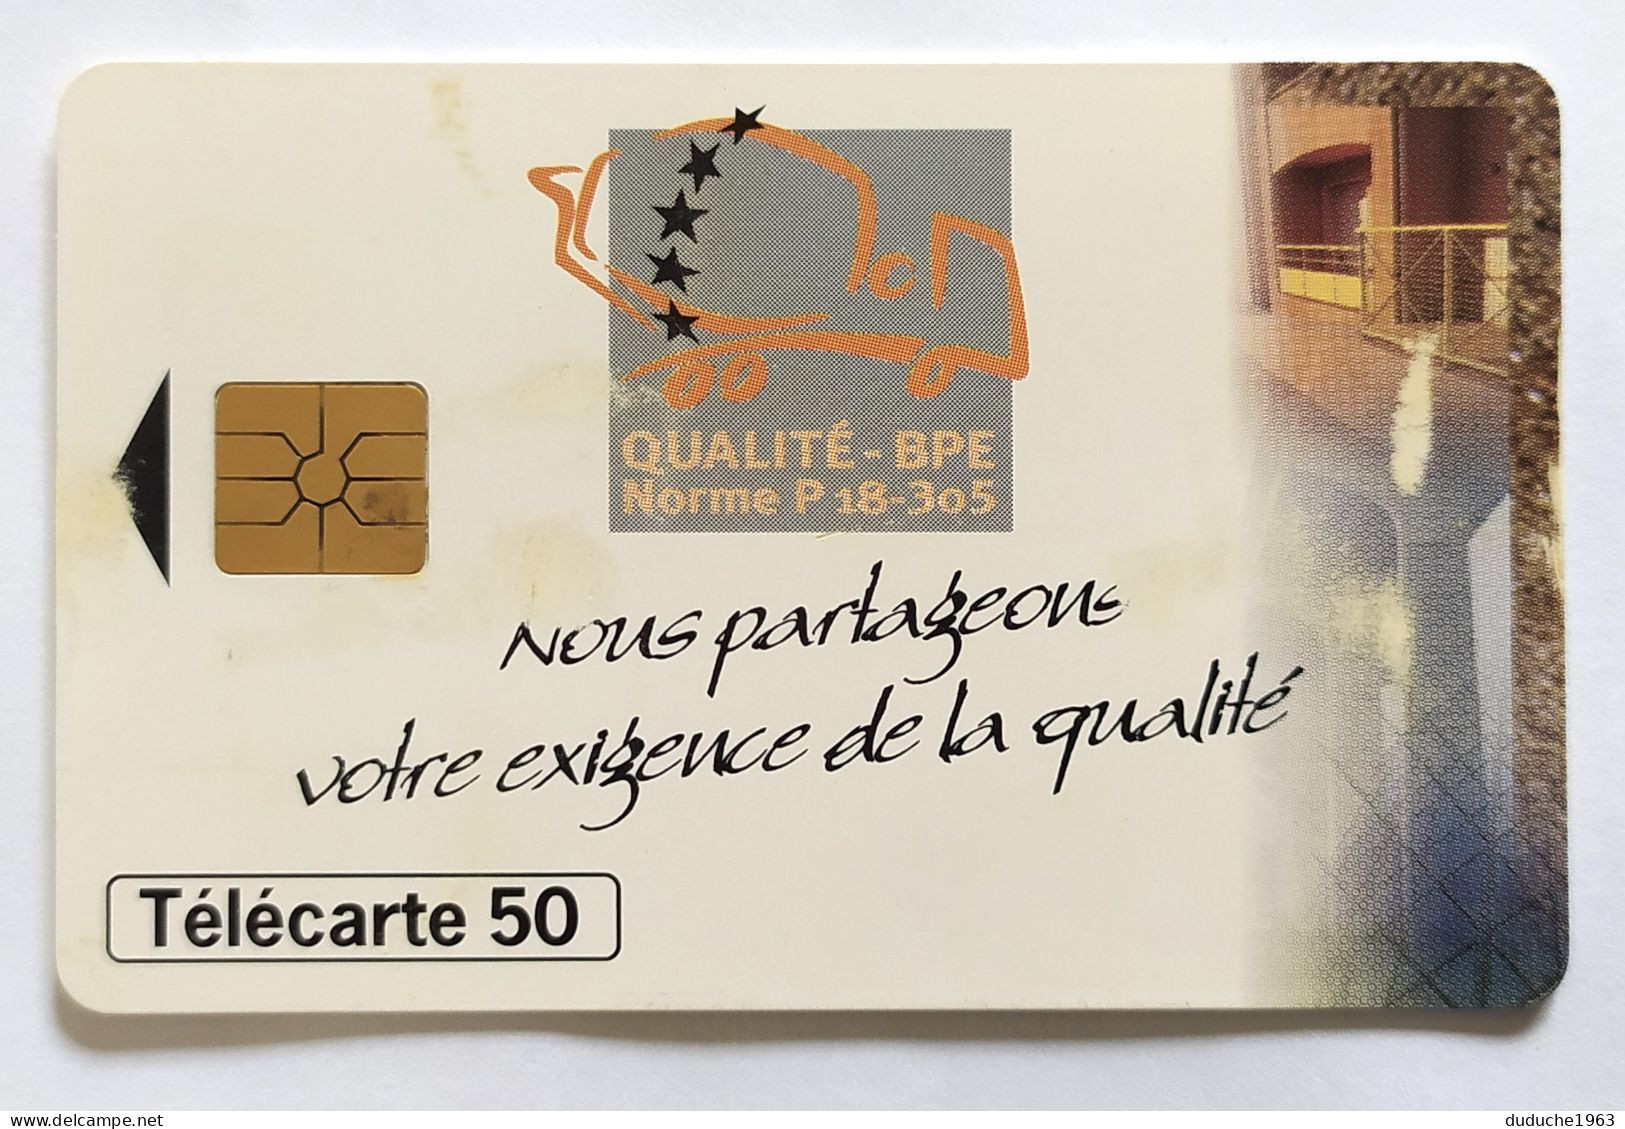 Télécarte France - BPE Syndicat National Du Béton - Privat